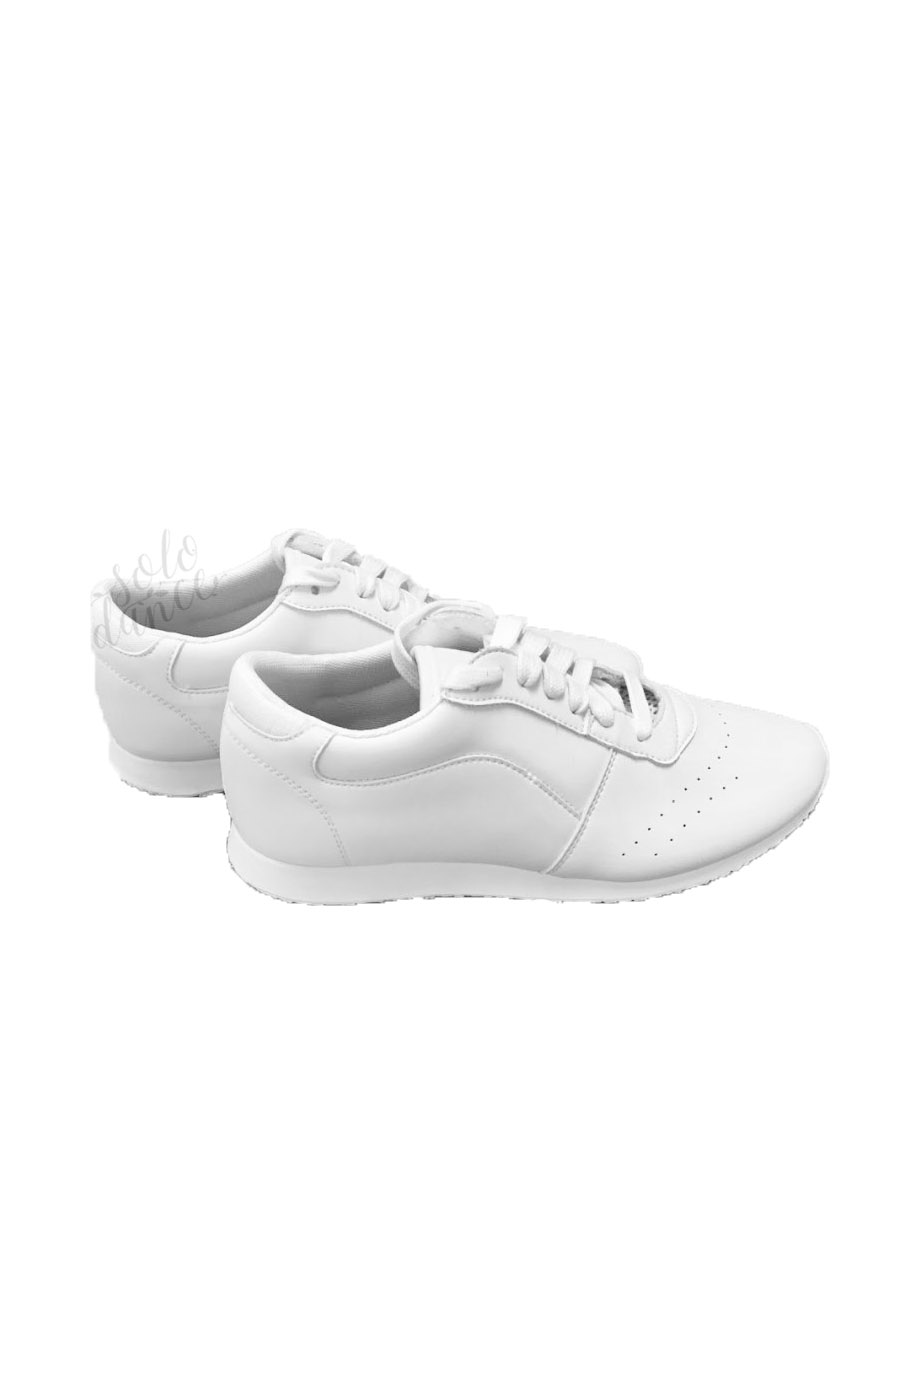 Aerobic shoes VENTURELLI  AER8 FIT white size 38